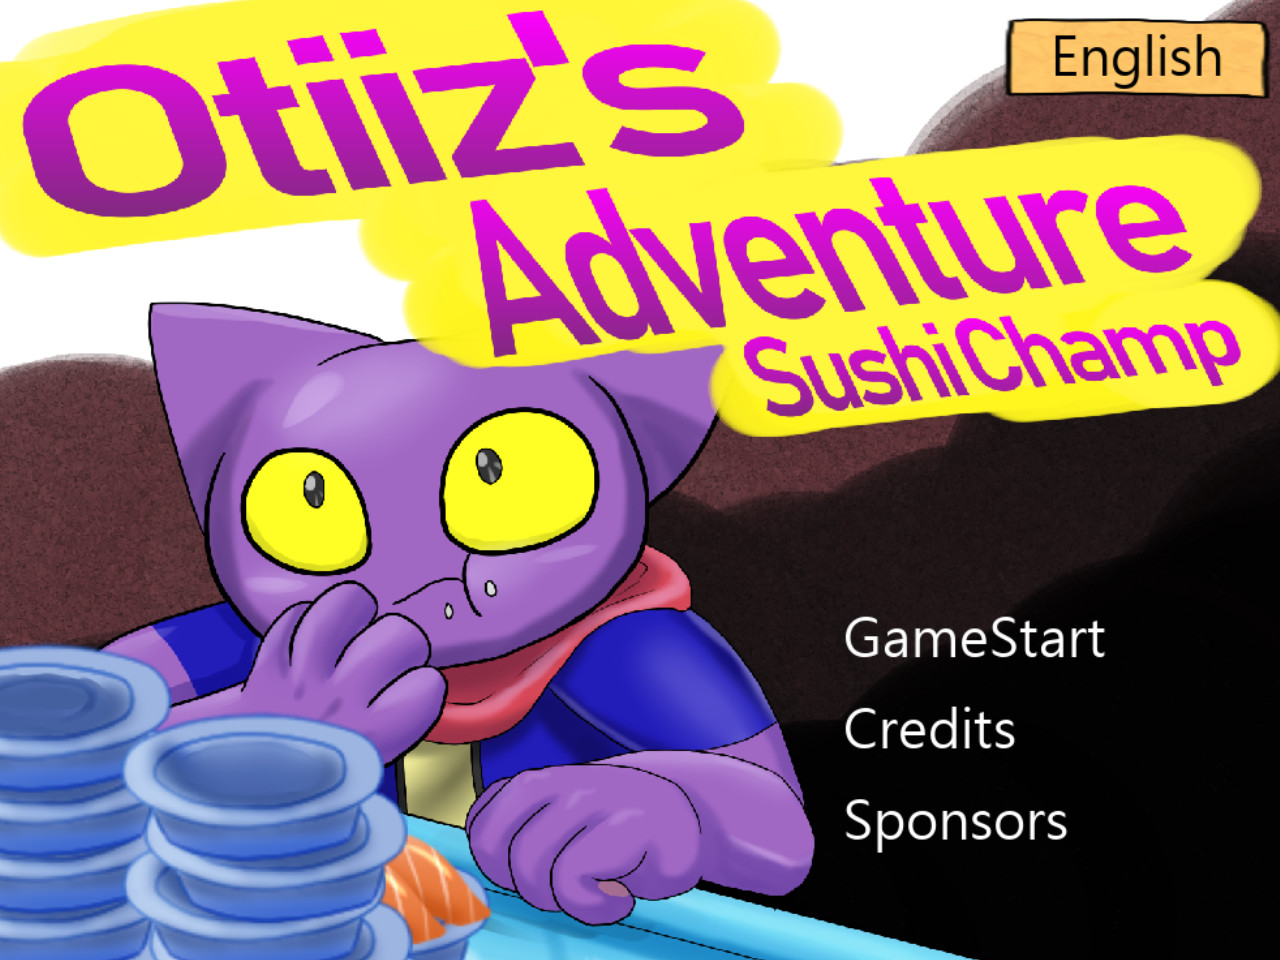 Otiiz's adventure - Sushi Champ Demo Featured Screenshot #1